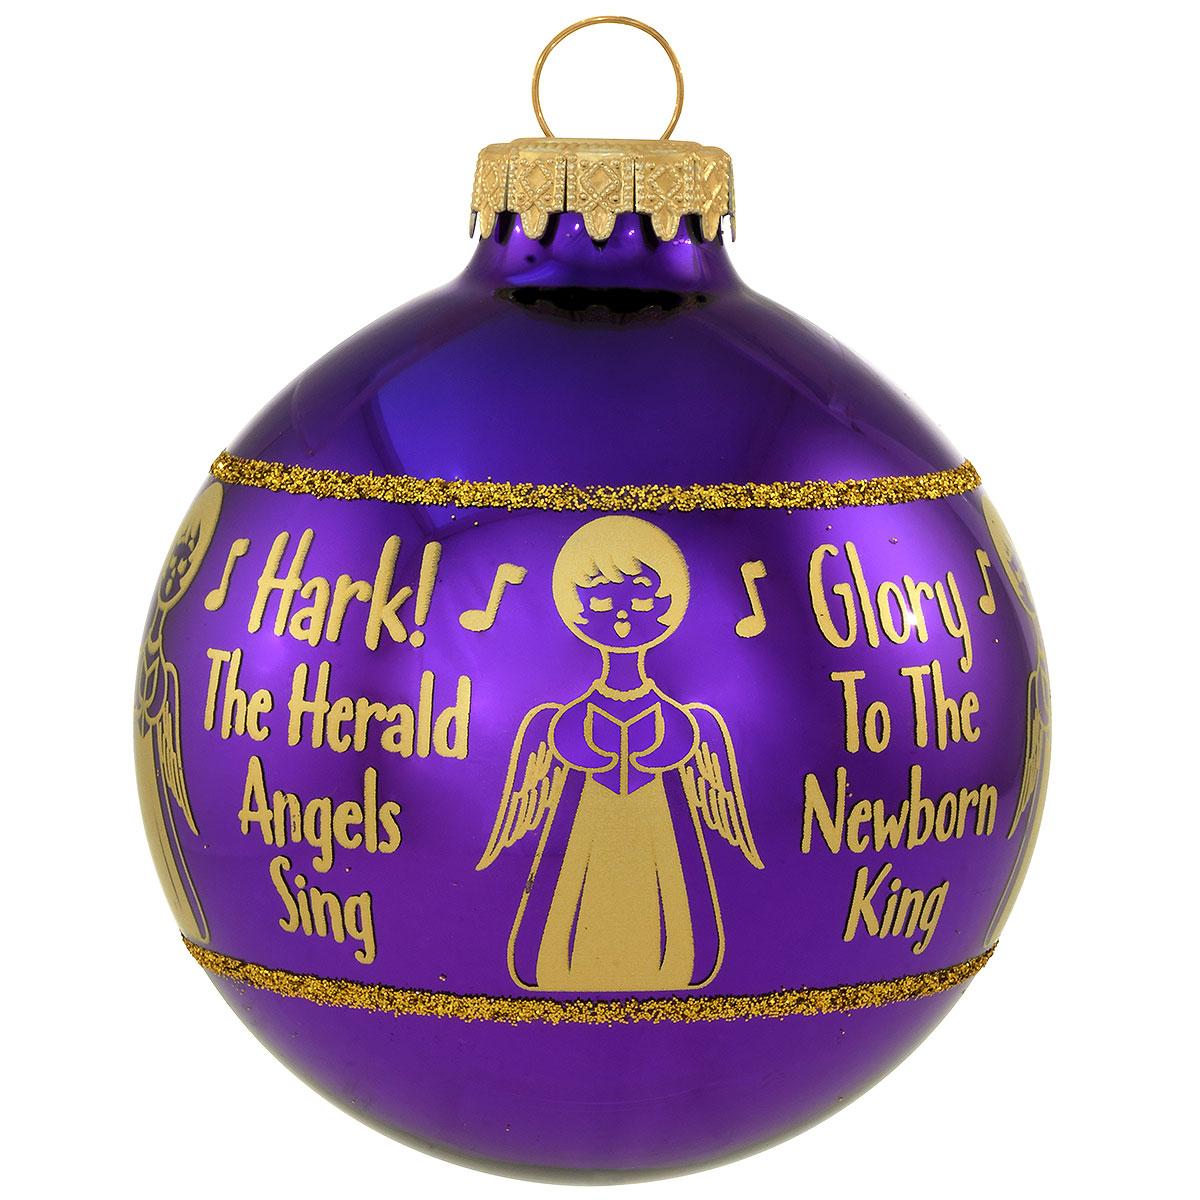 Hark Herald Angels Sing Ornament